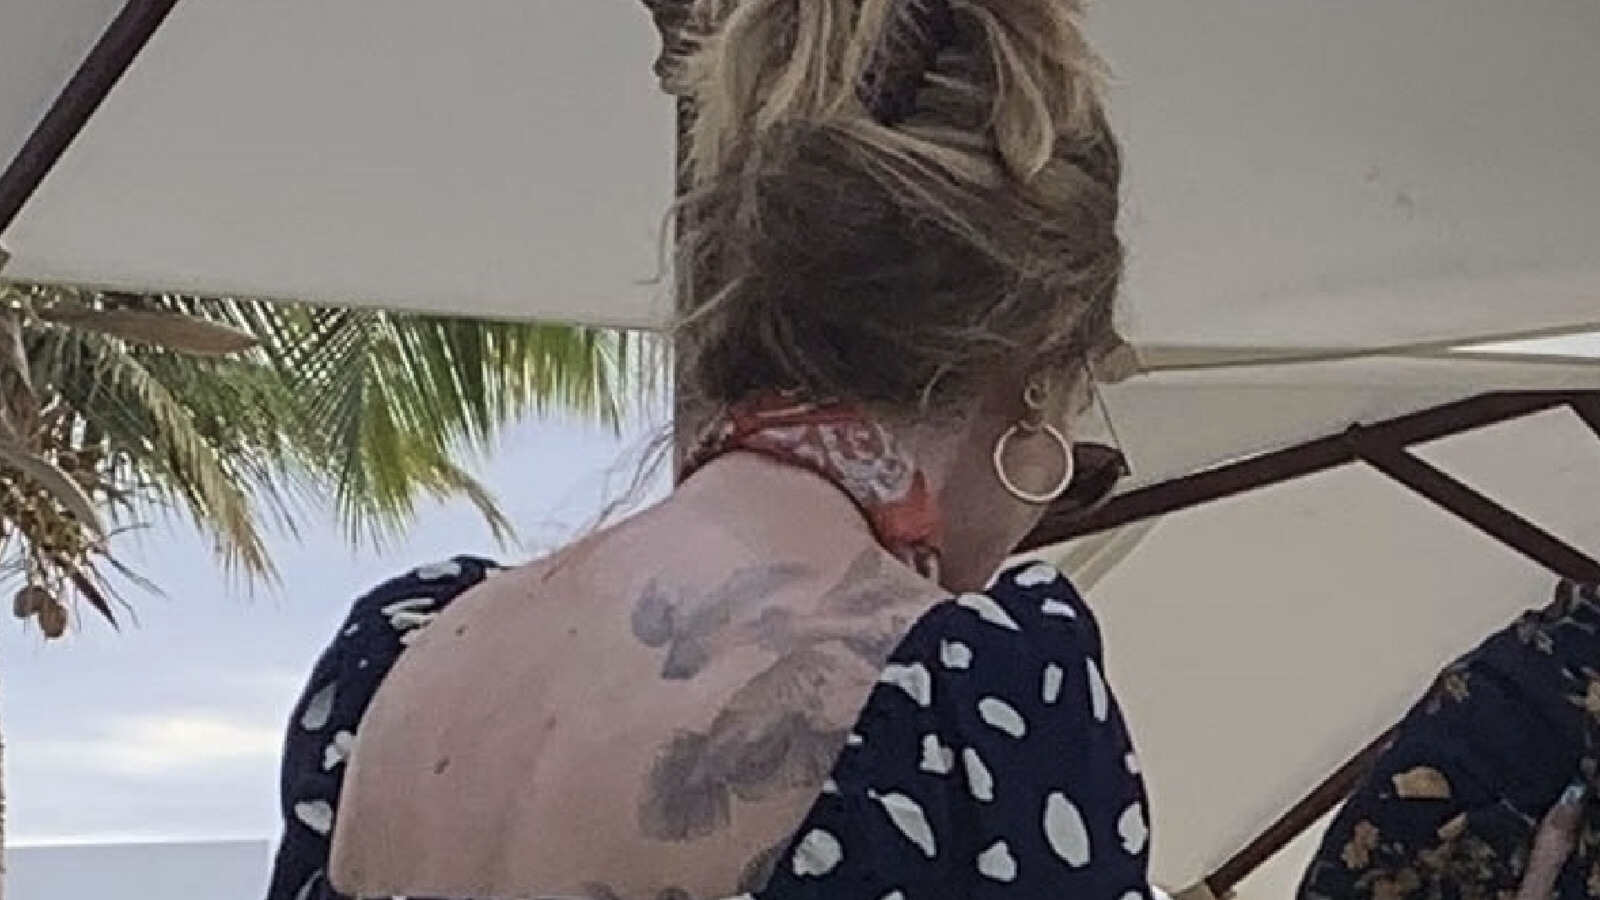 Adele's back tattoo